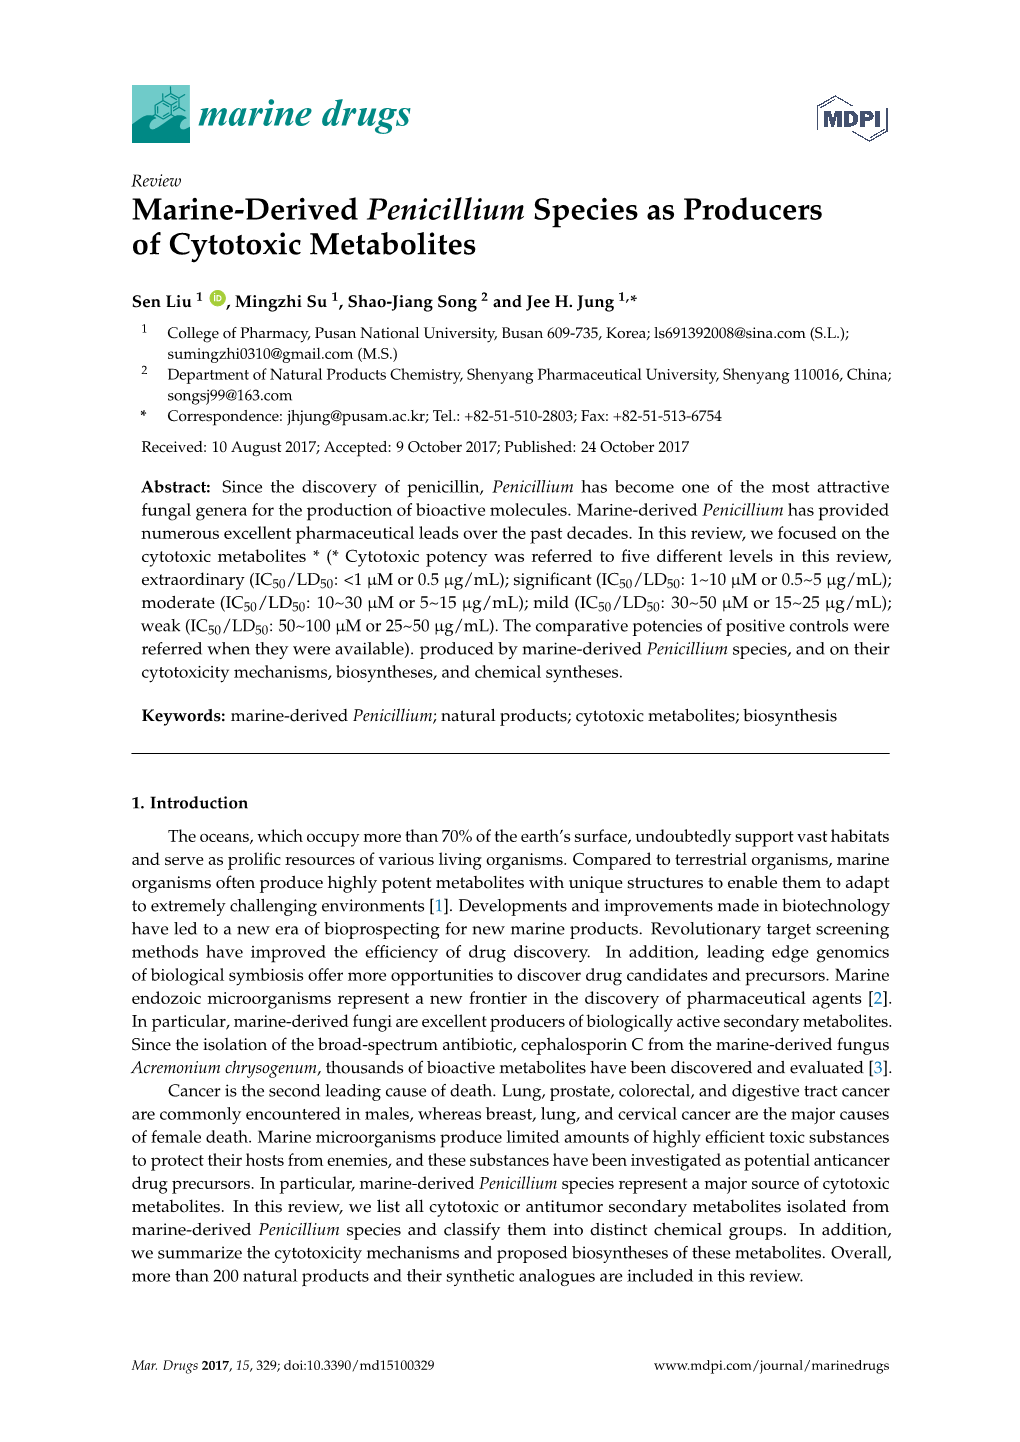 Marine-Derived Penicillium Species As Producers of Cytotoxic Metabolites